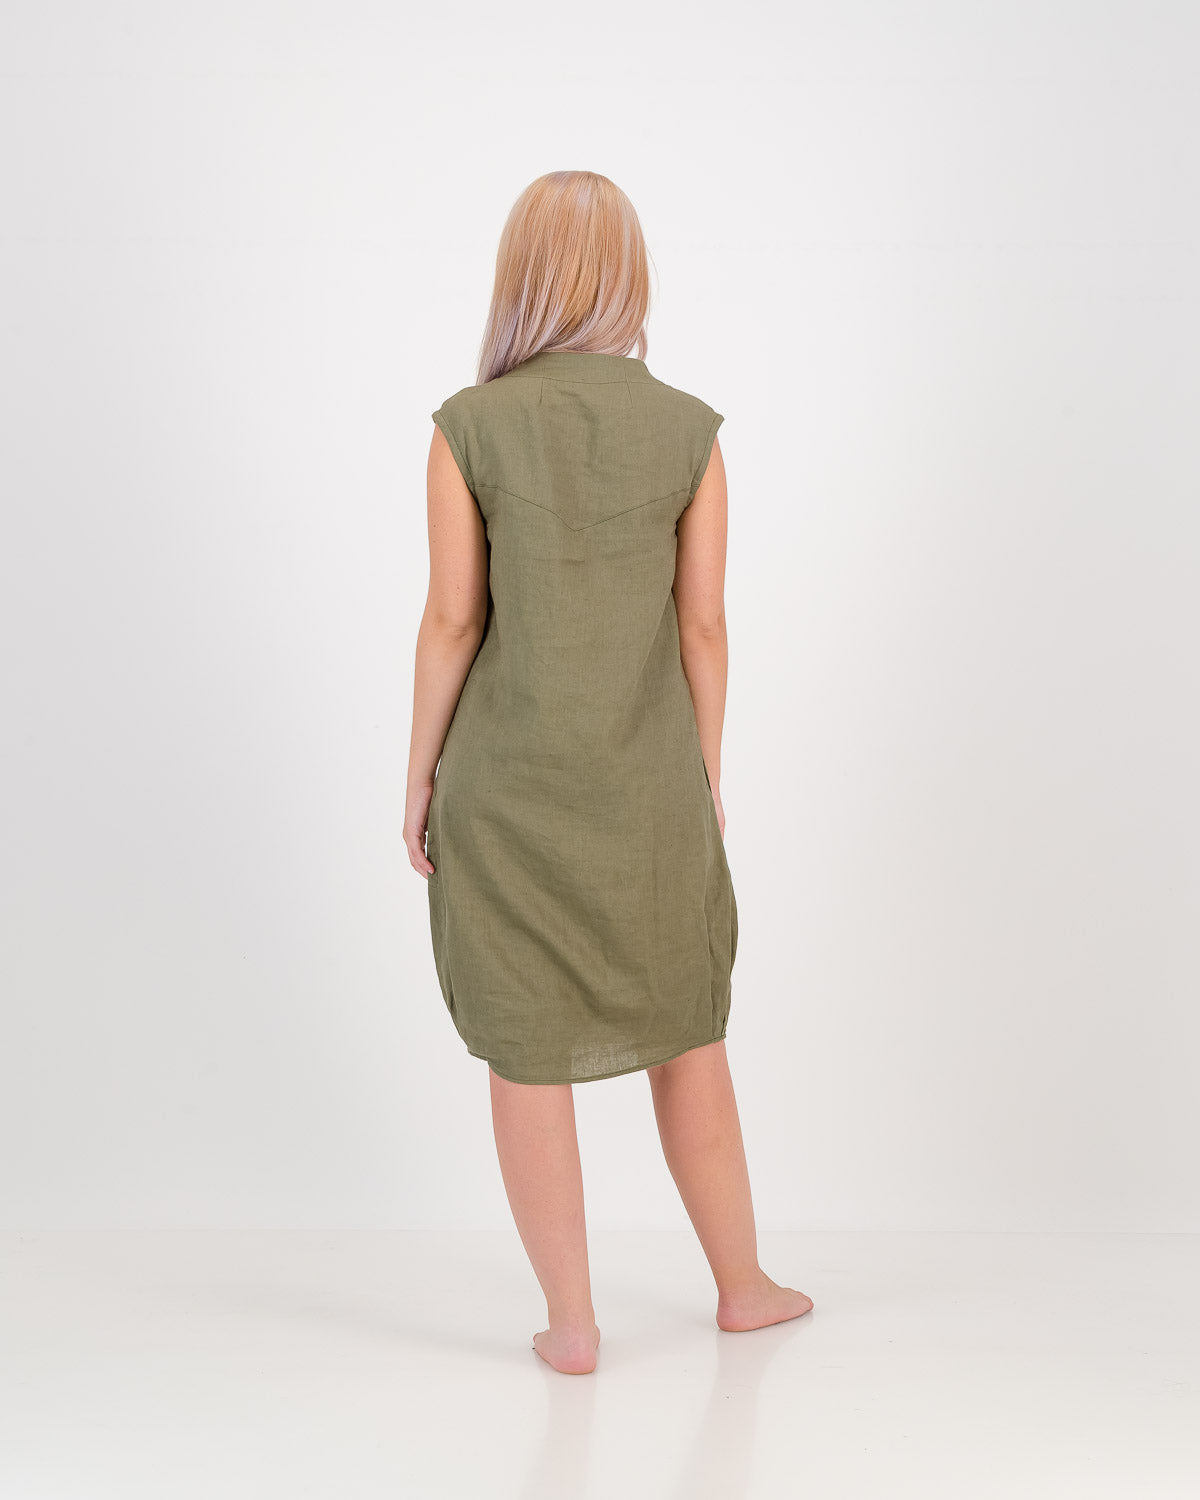 LUNAR clothing, olive steph dress, eco fashion, sustainable